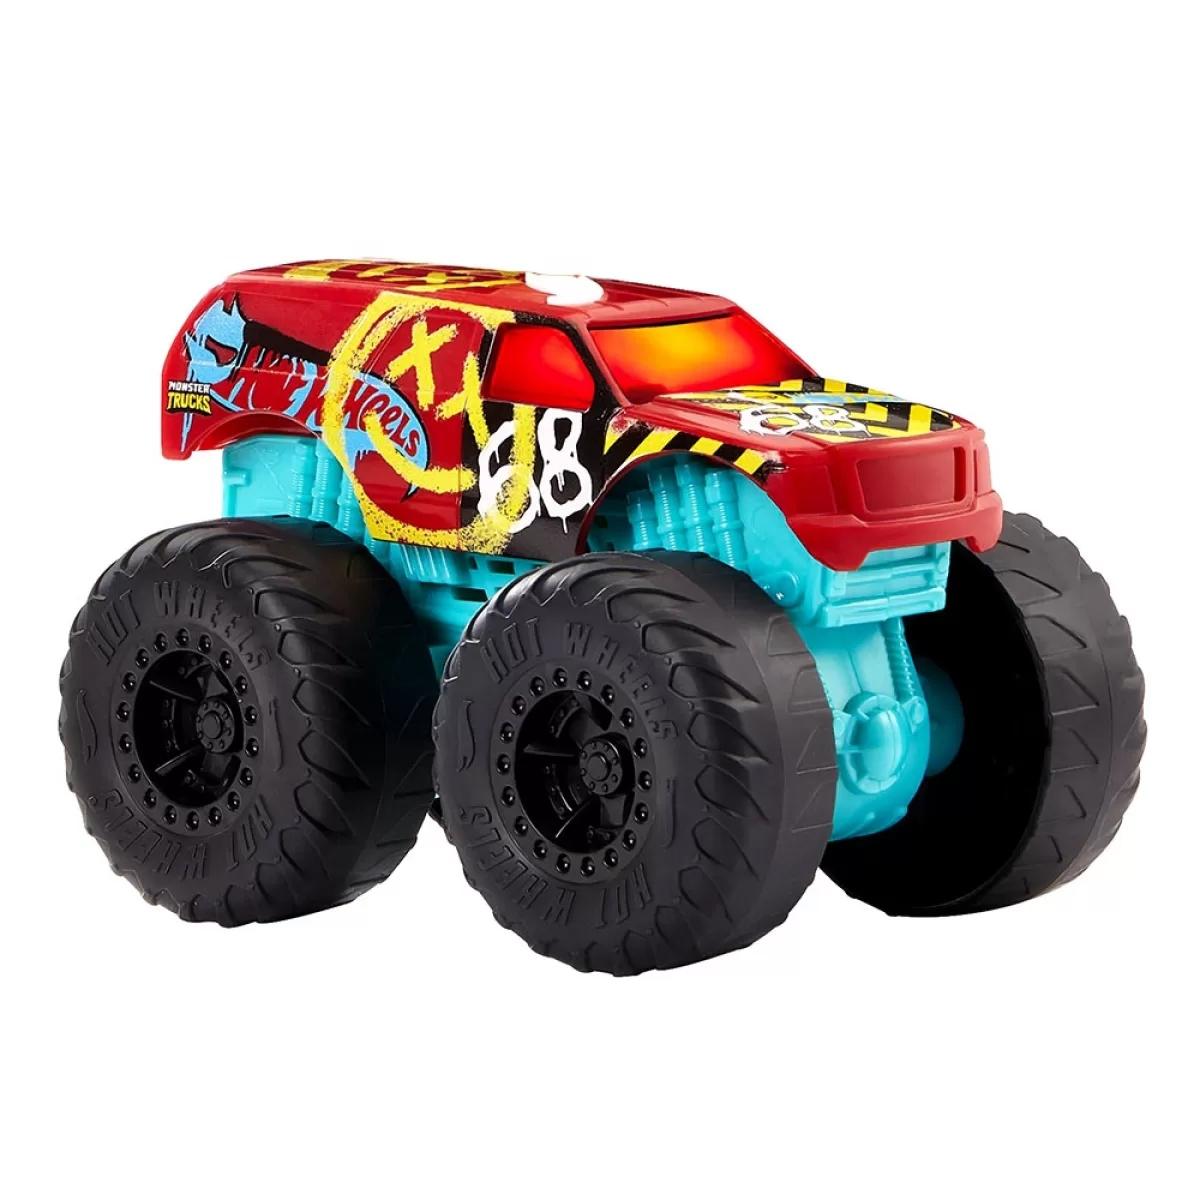 Hot Wheels Monster Trucks Roarin' Wreckers - Boneshaker